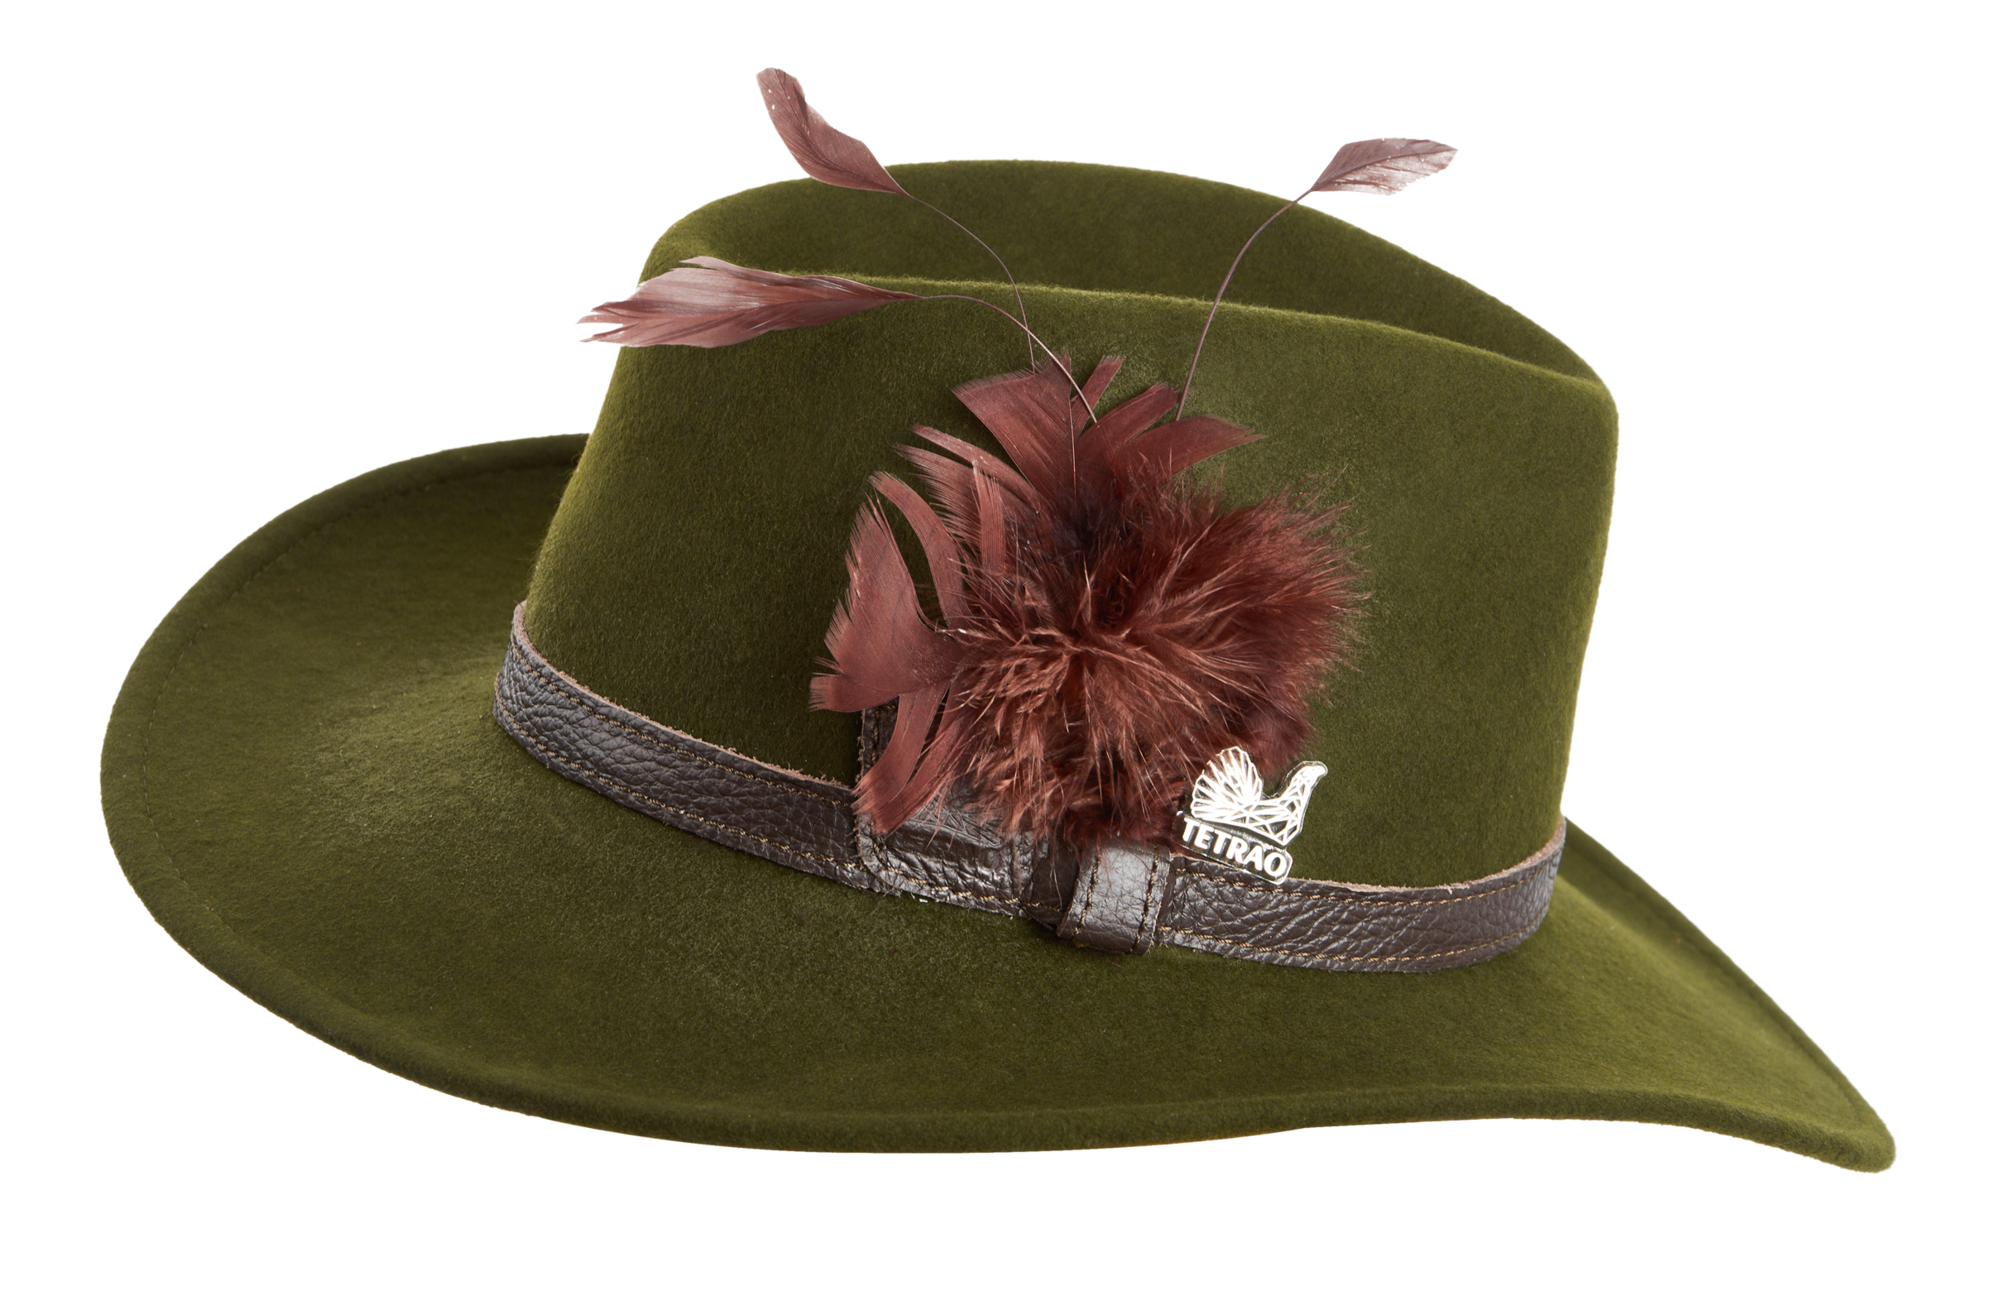 Dámsky poľovnícky klobúk TETRAO - s hnedým remienkom zelený 54  